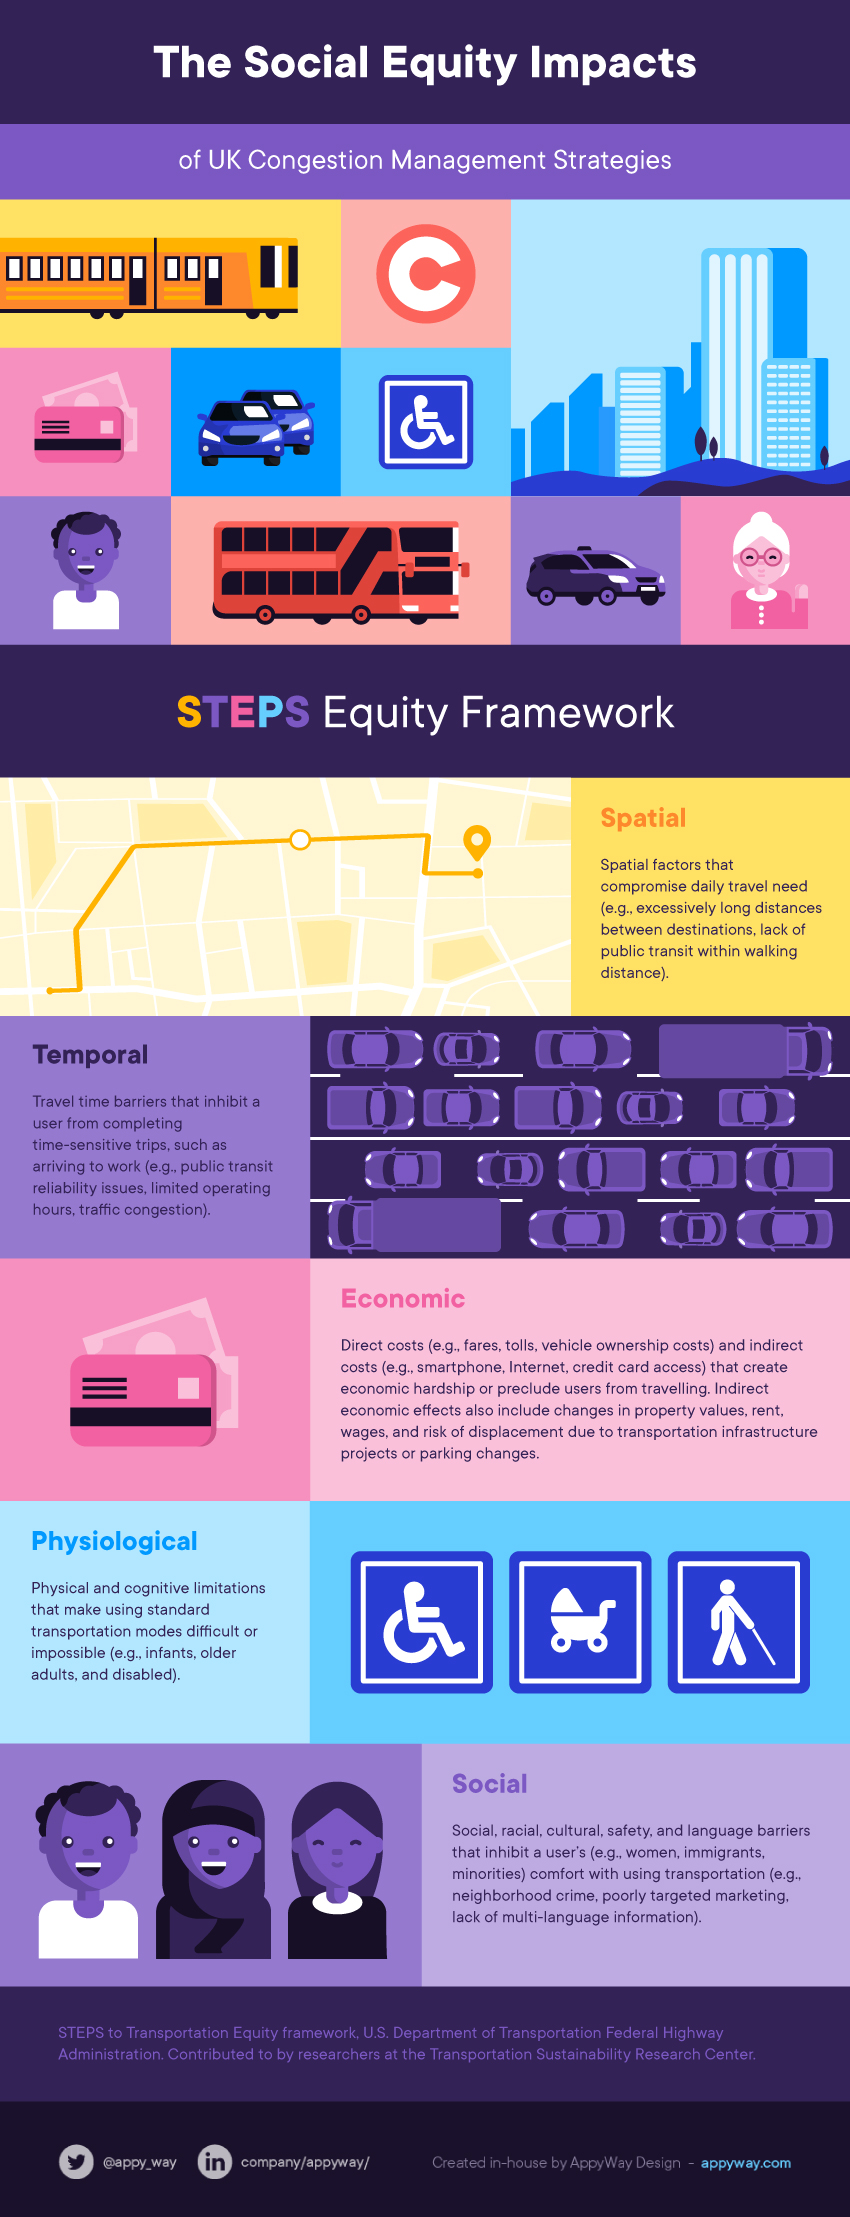 STEPS equity framework